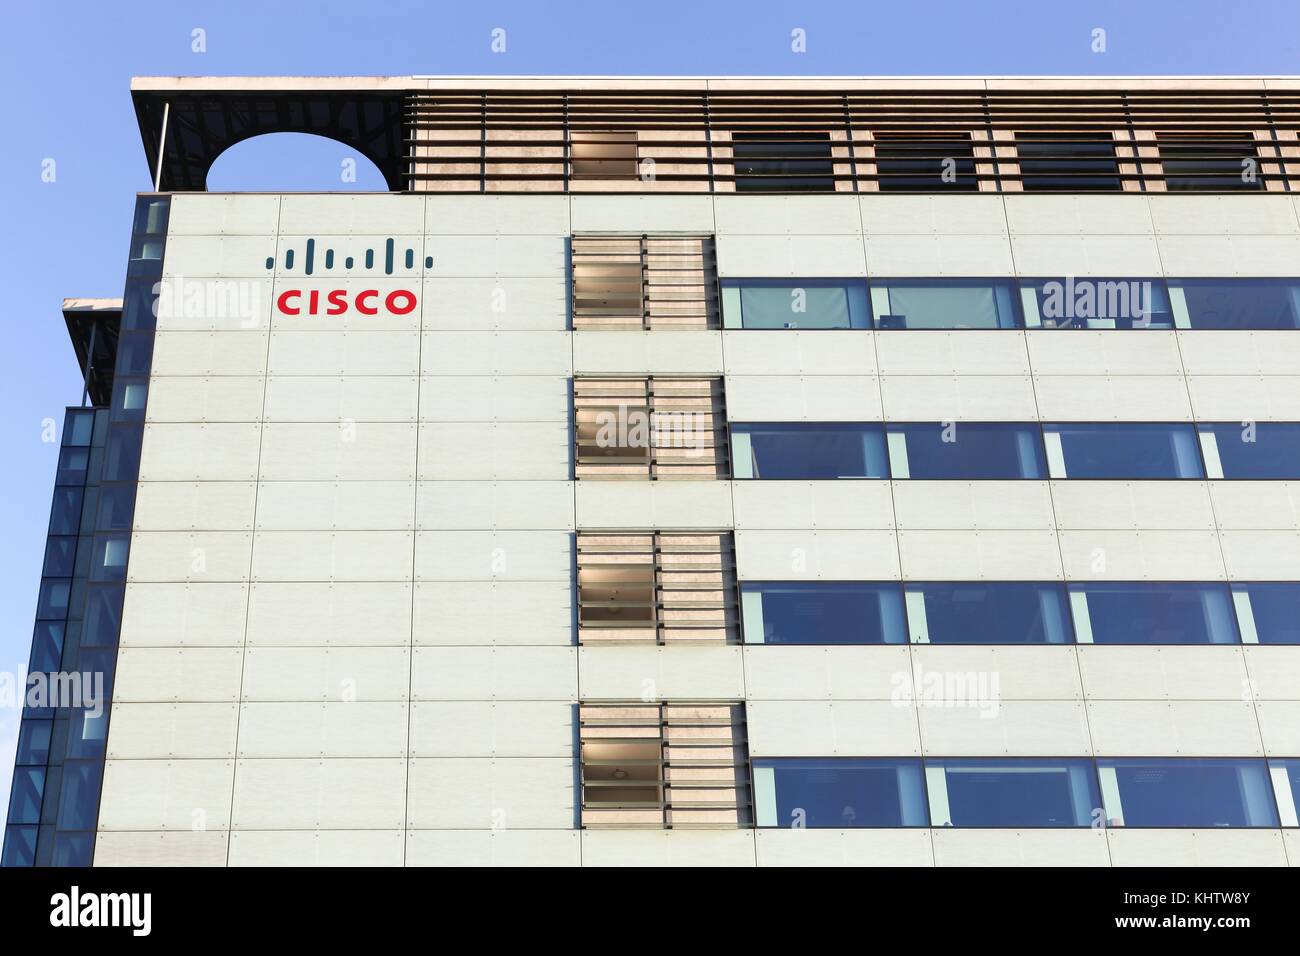 Kopenhagen, Dänemark - 10 September 2017: Cisco Systems Gebäude in Kopenhagen. Cisco Systems ist ein US-amerikanischer multinationaler Technologiekonzern Stockfoto